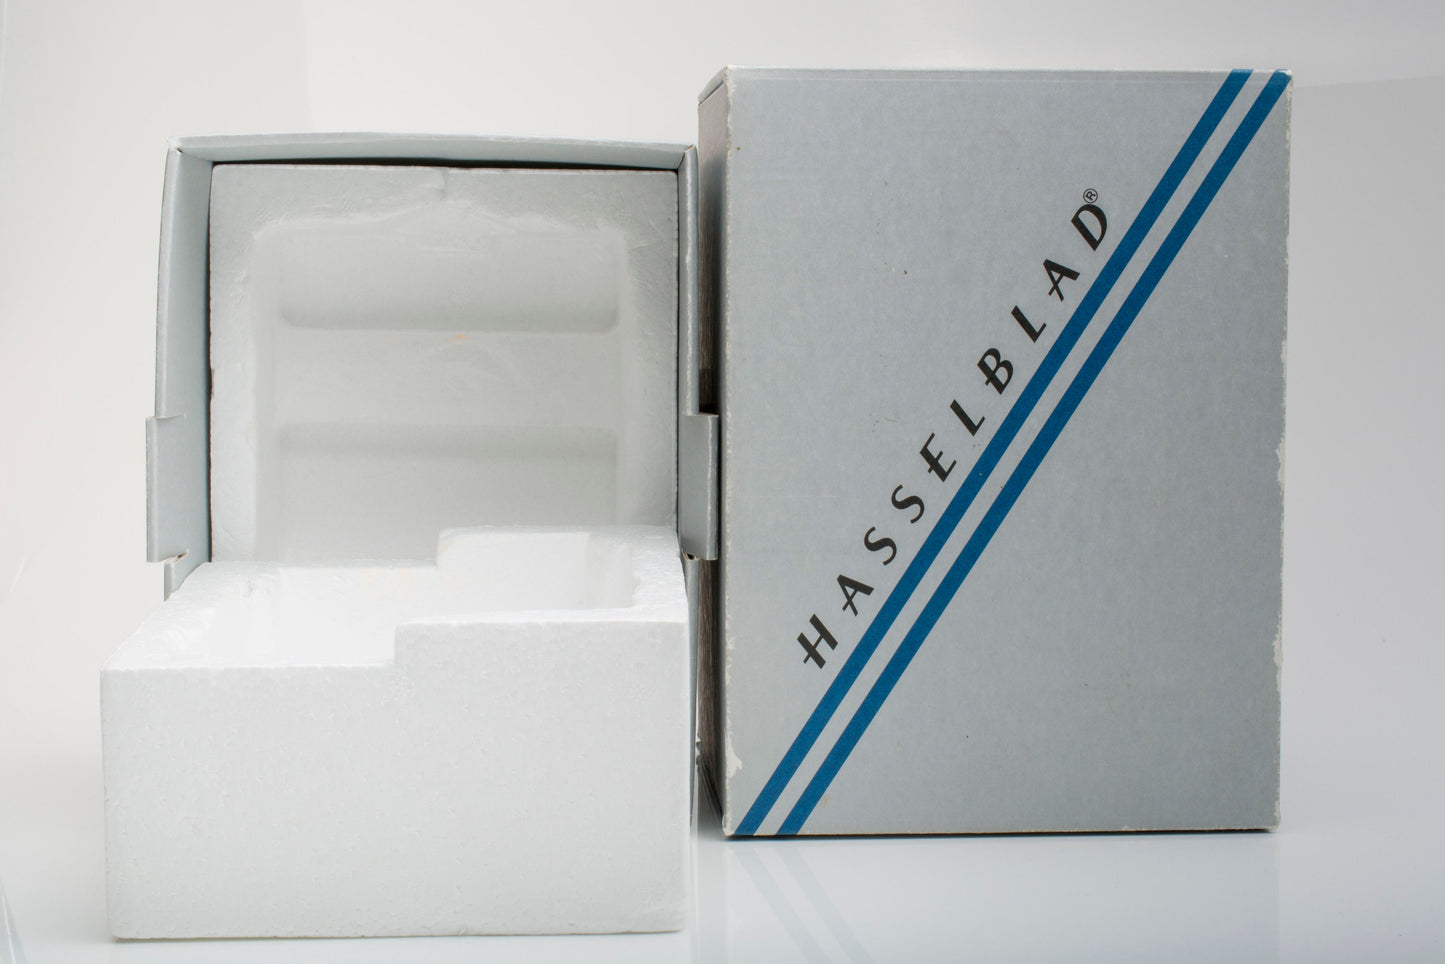 Hasselblad Winder CW Motor Drive Grip Original Box